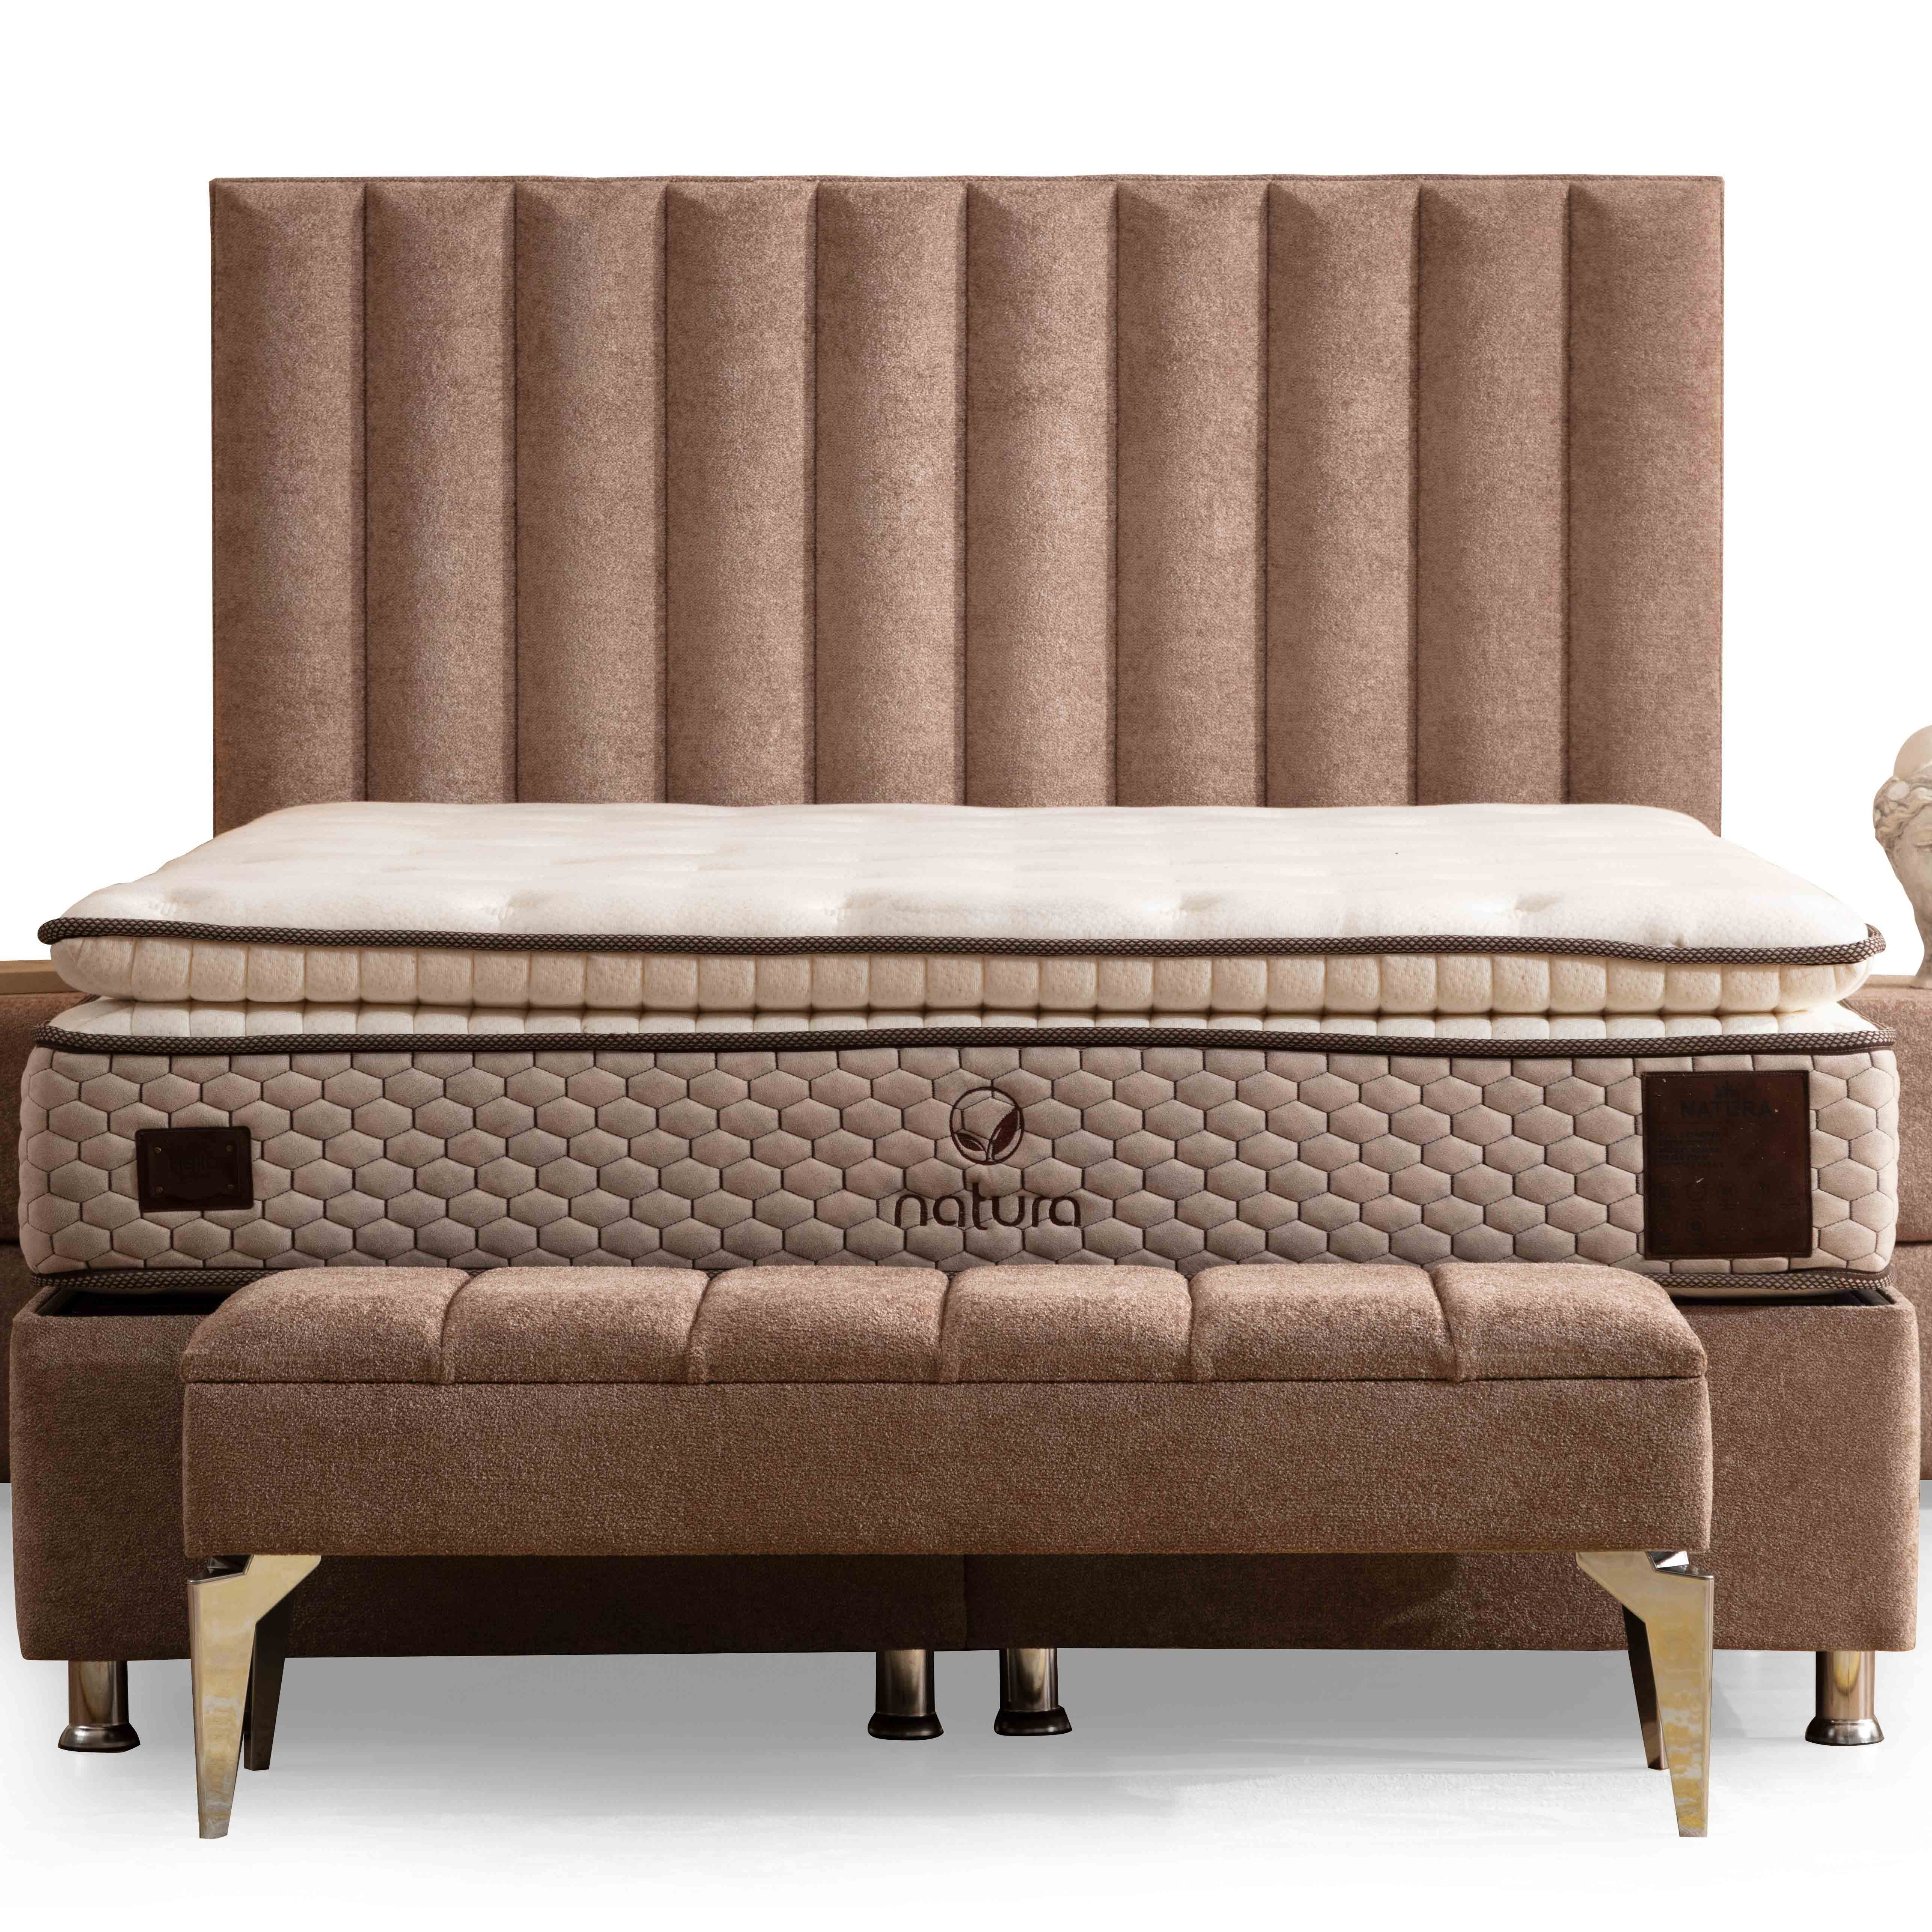 Nice Bed With Storage 180x200 cm